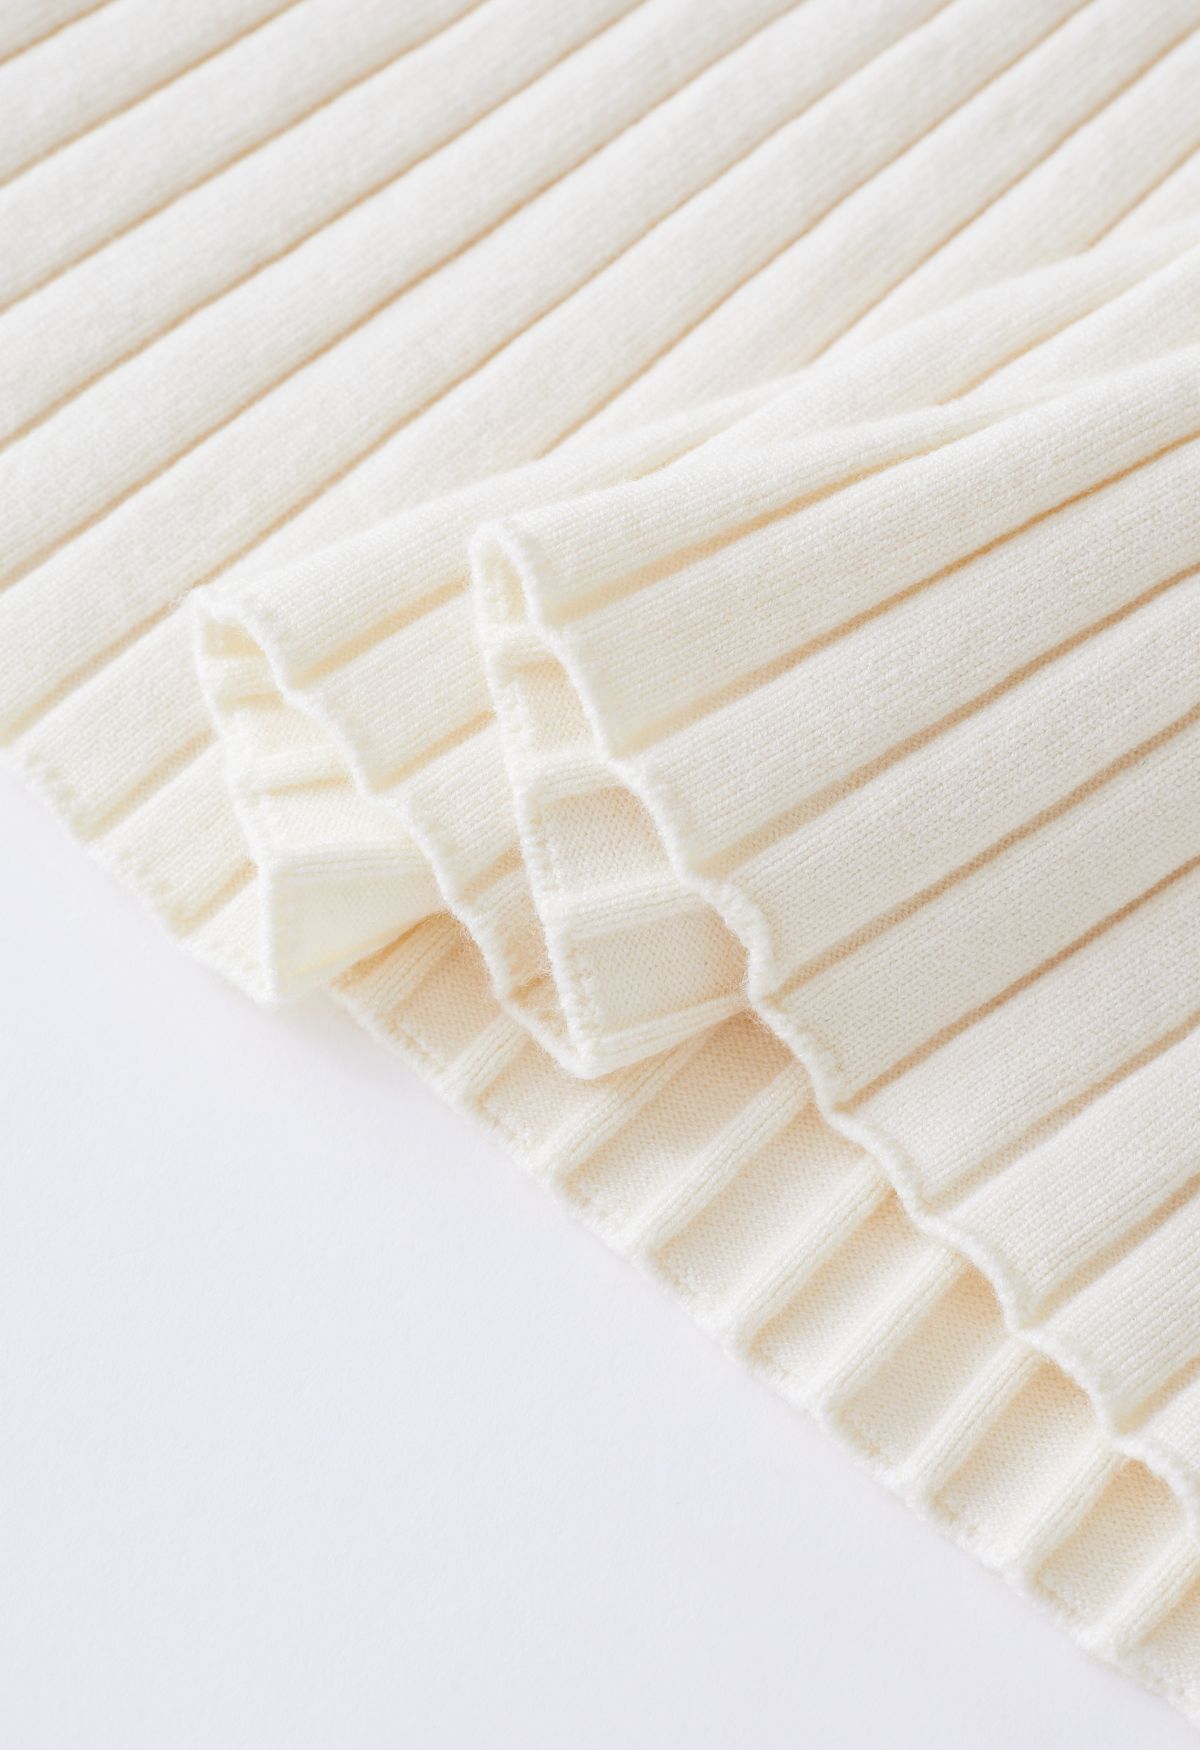 Ribbed Texture Frilling Midi Dress in Cream